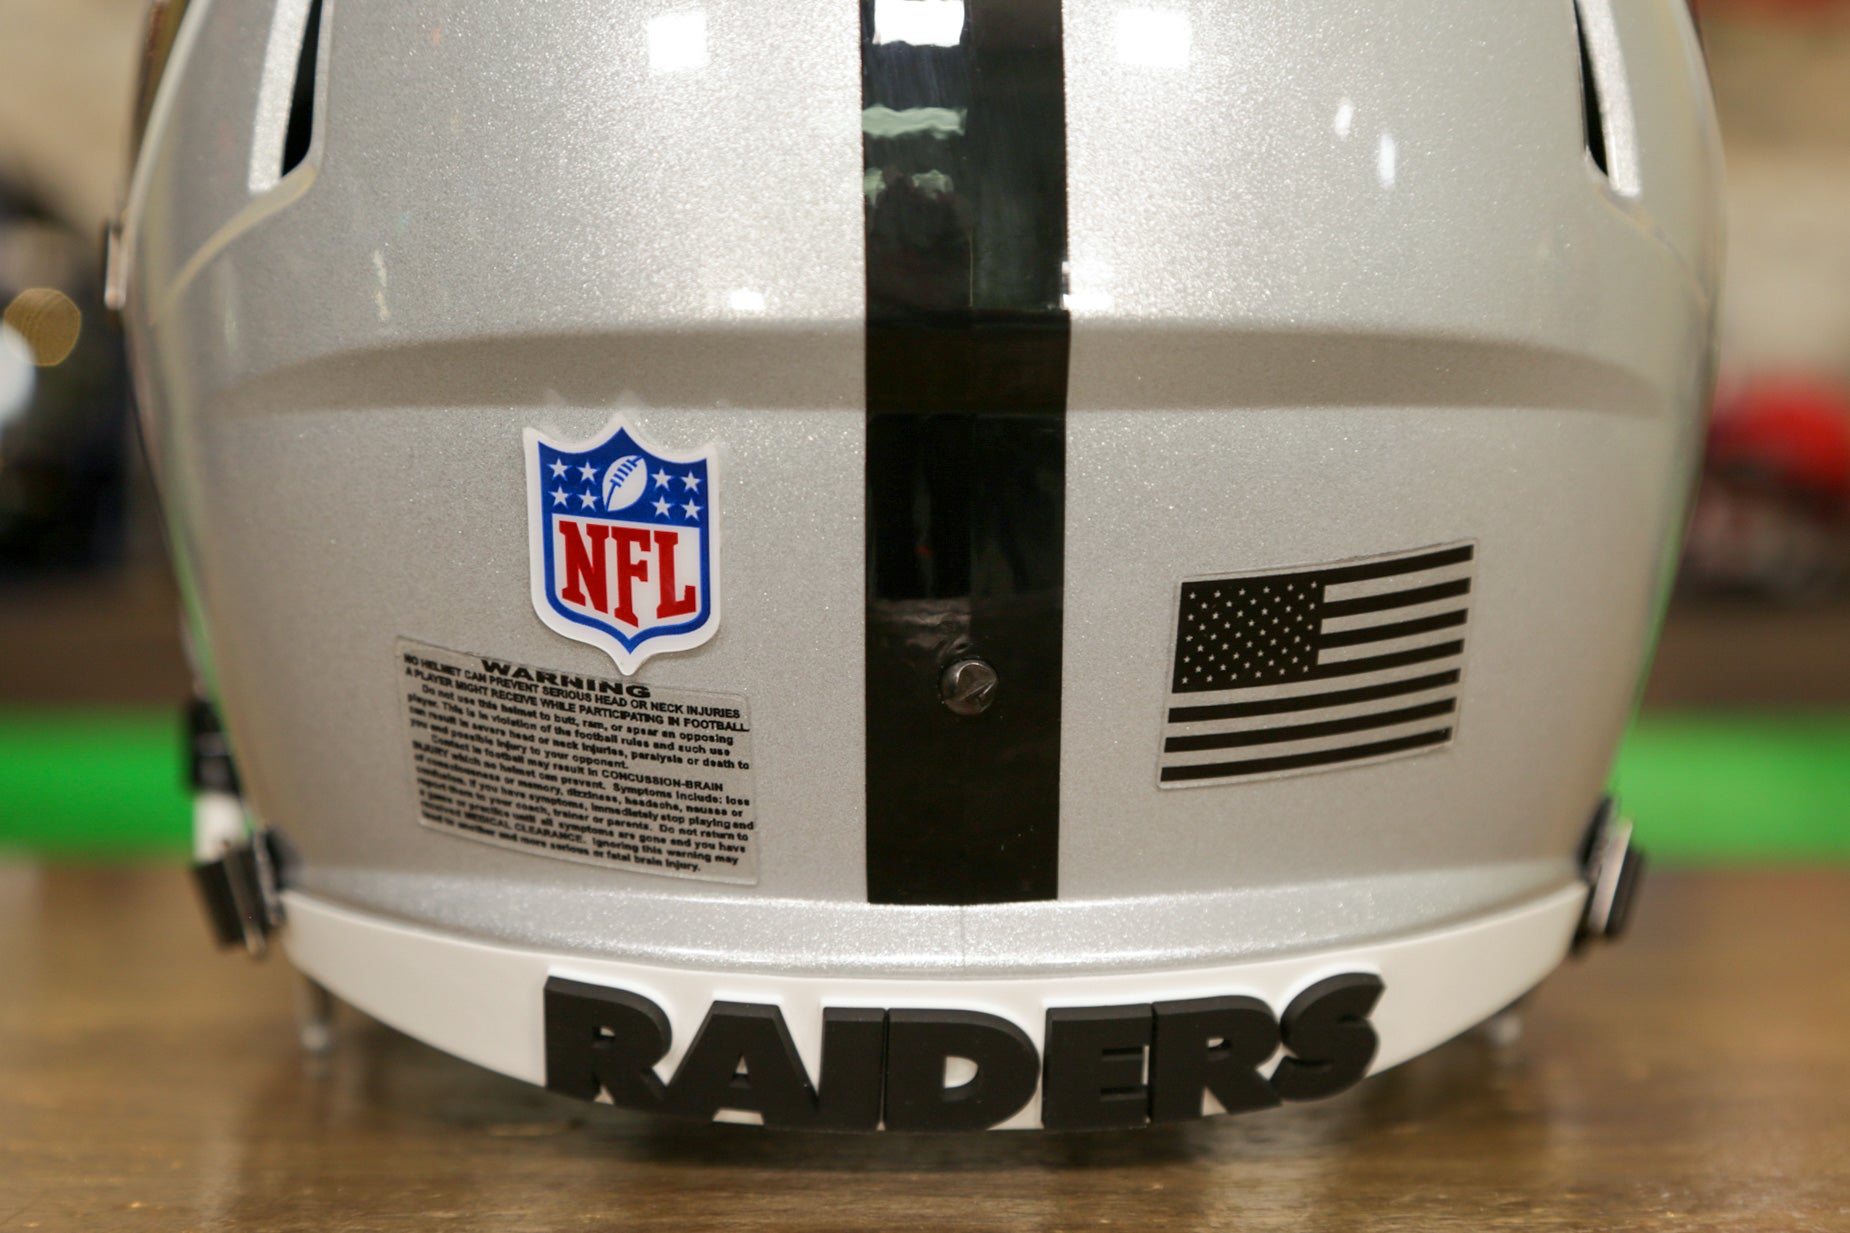 Las Vegas Raiders Riddell Speed Replica Helmet - GG Edition